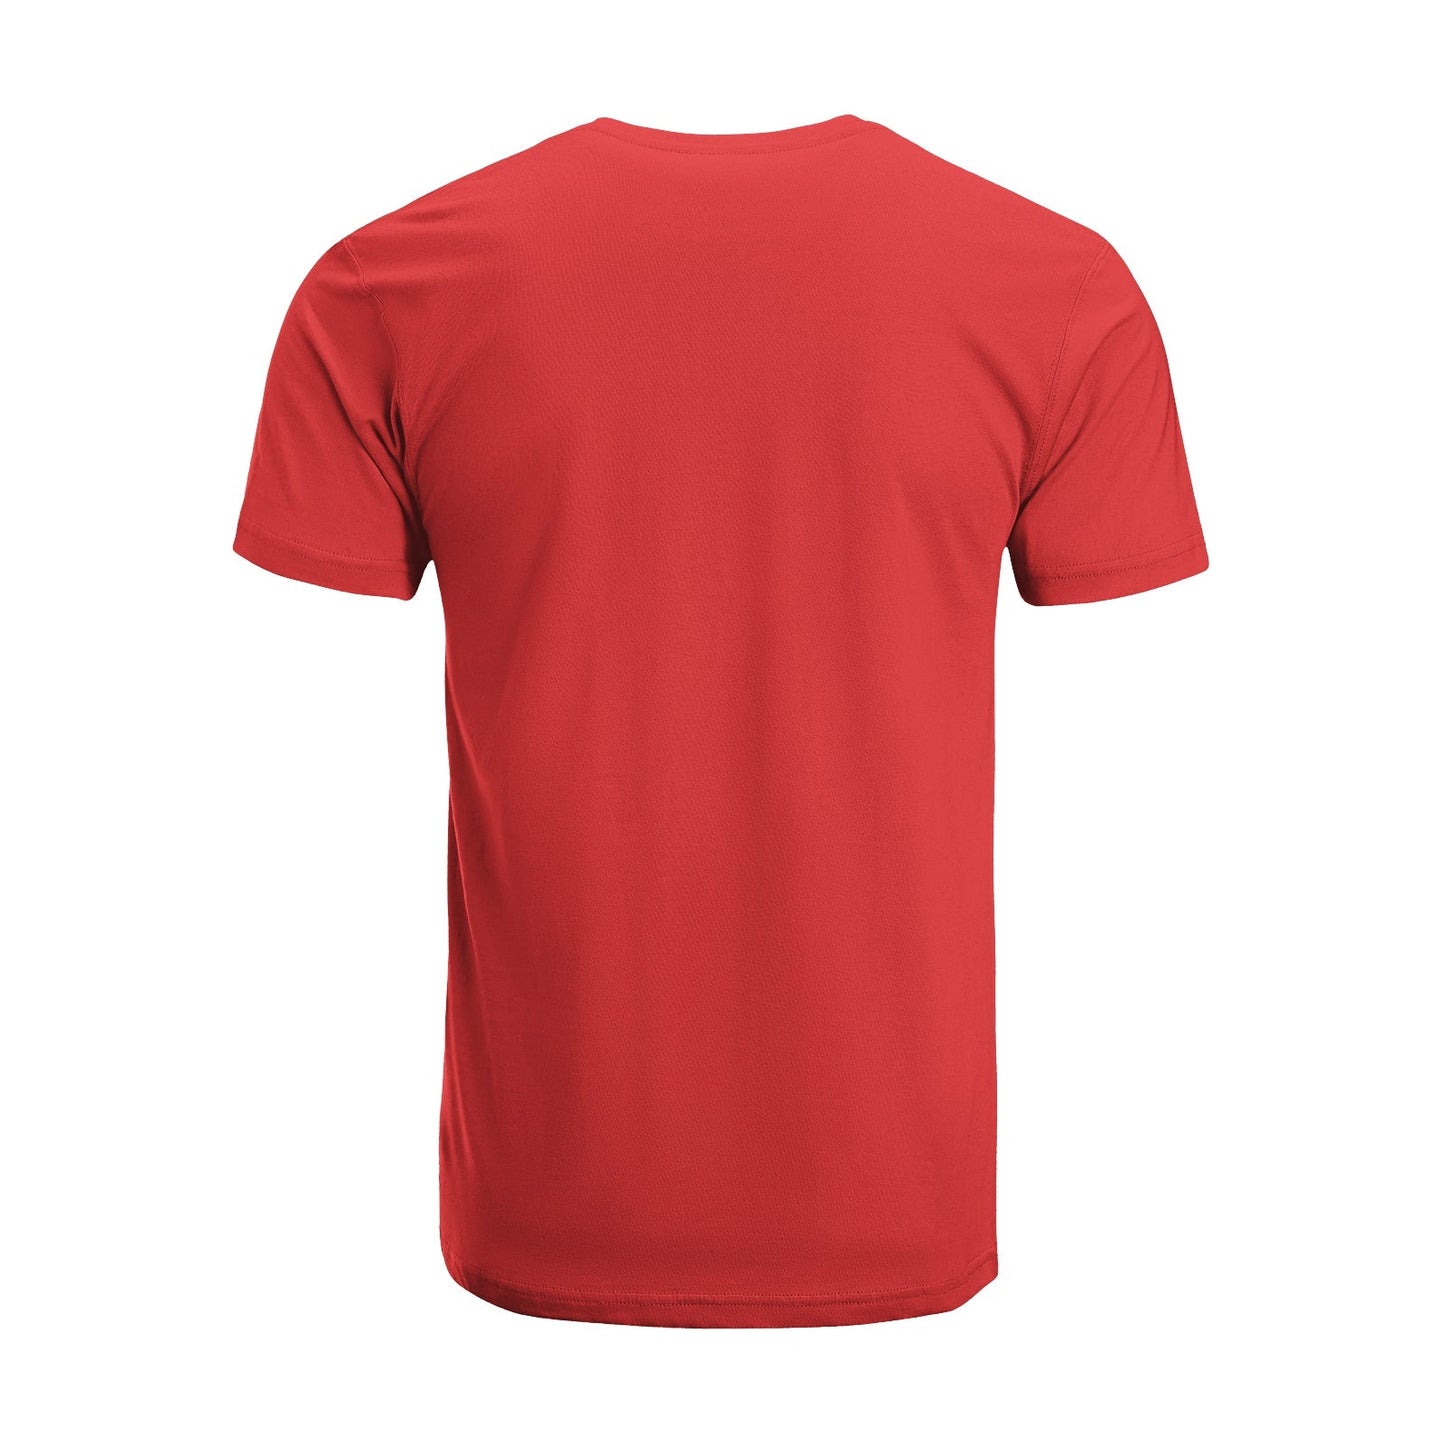 Unisex Short Sleeve Crew Neck Cotton Jersey T-Shirt MOM 29